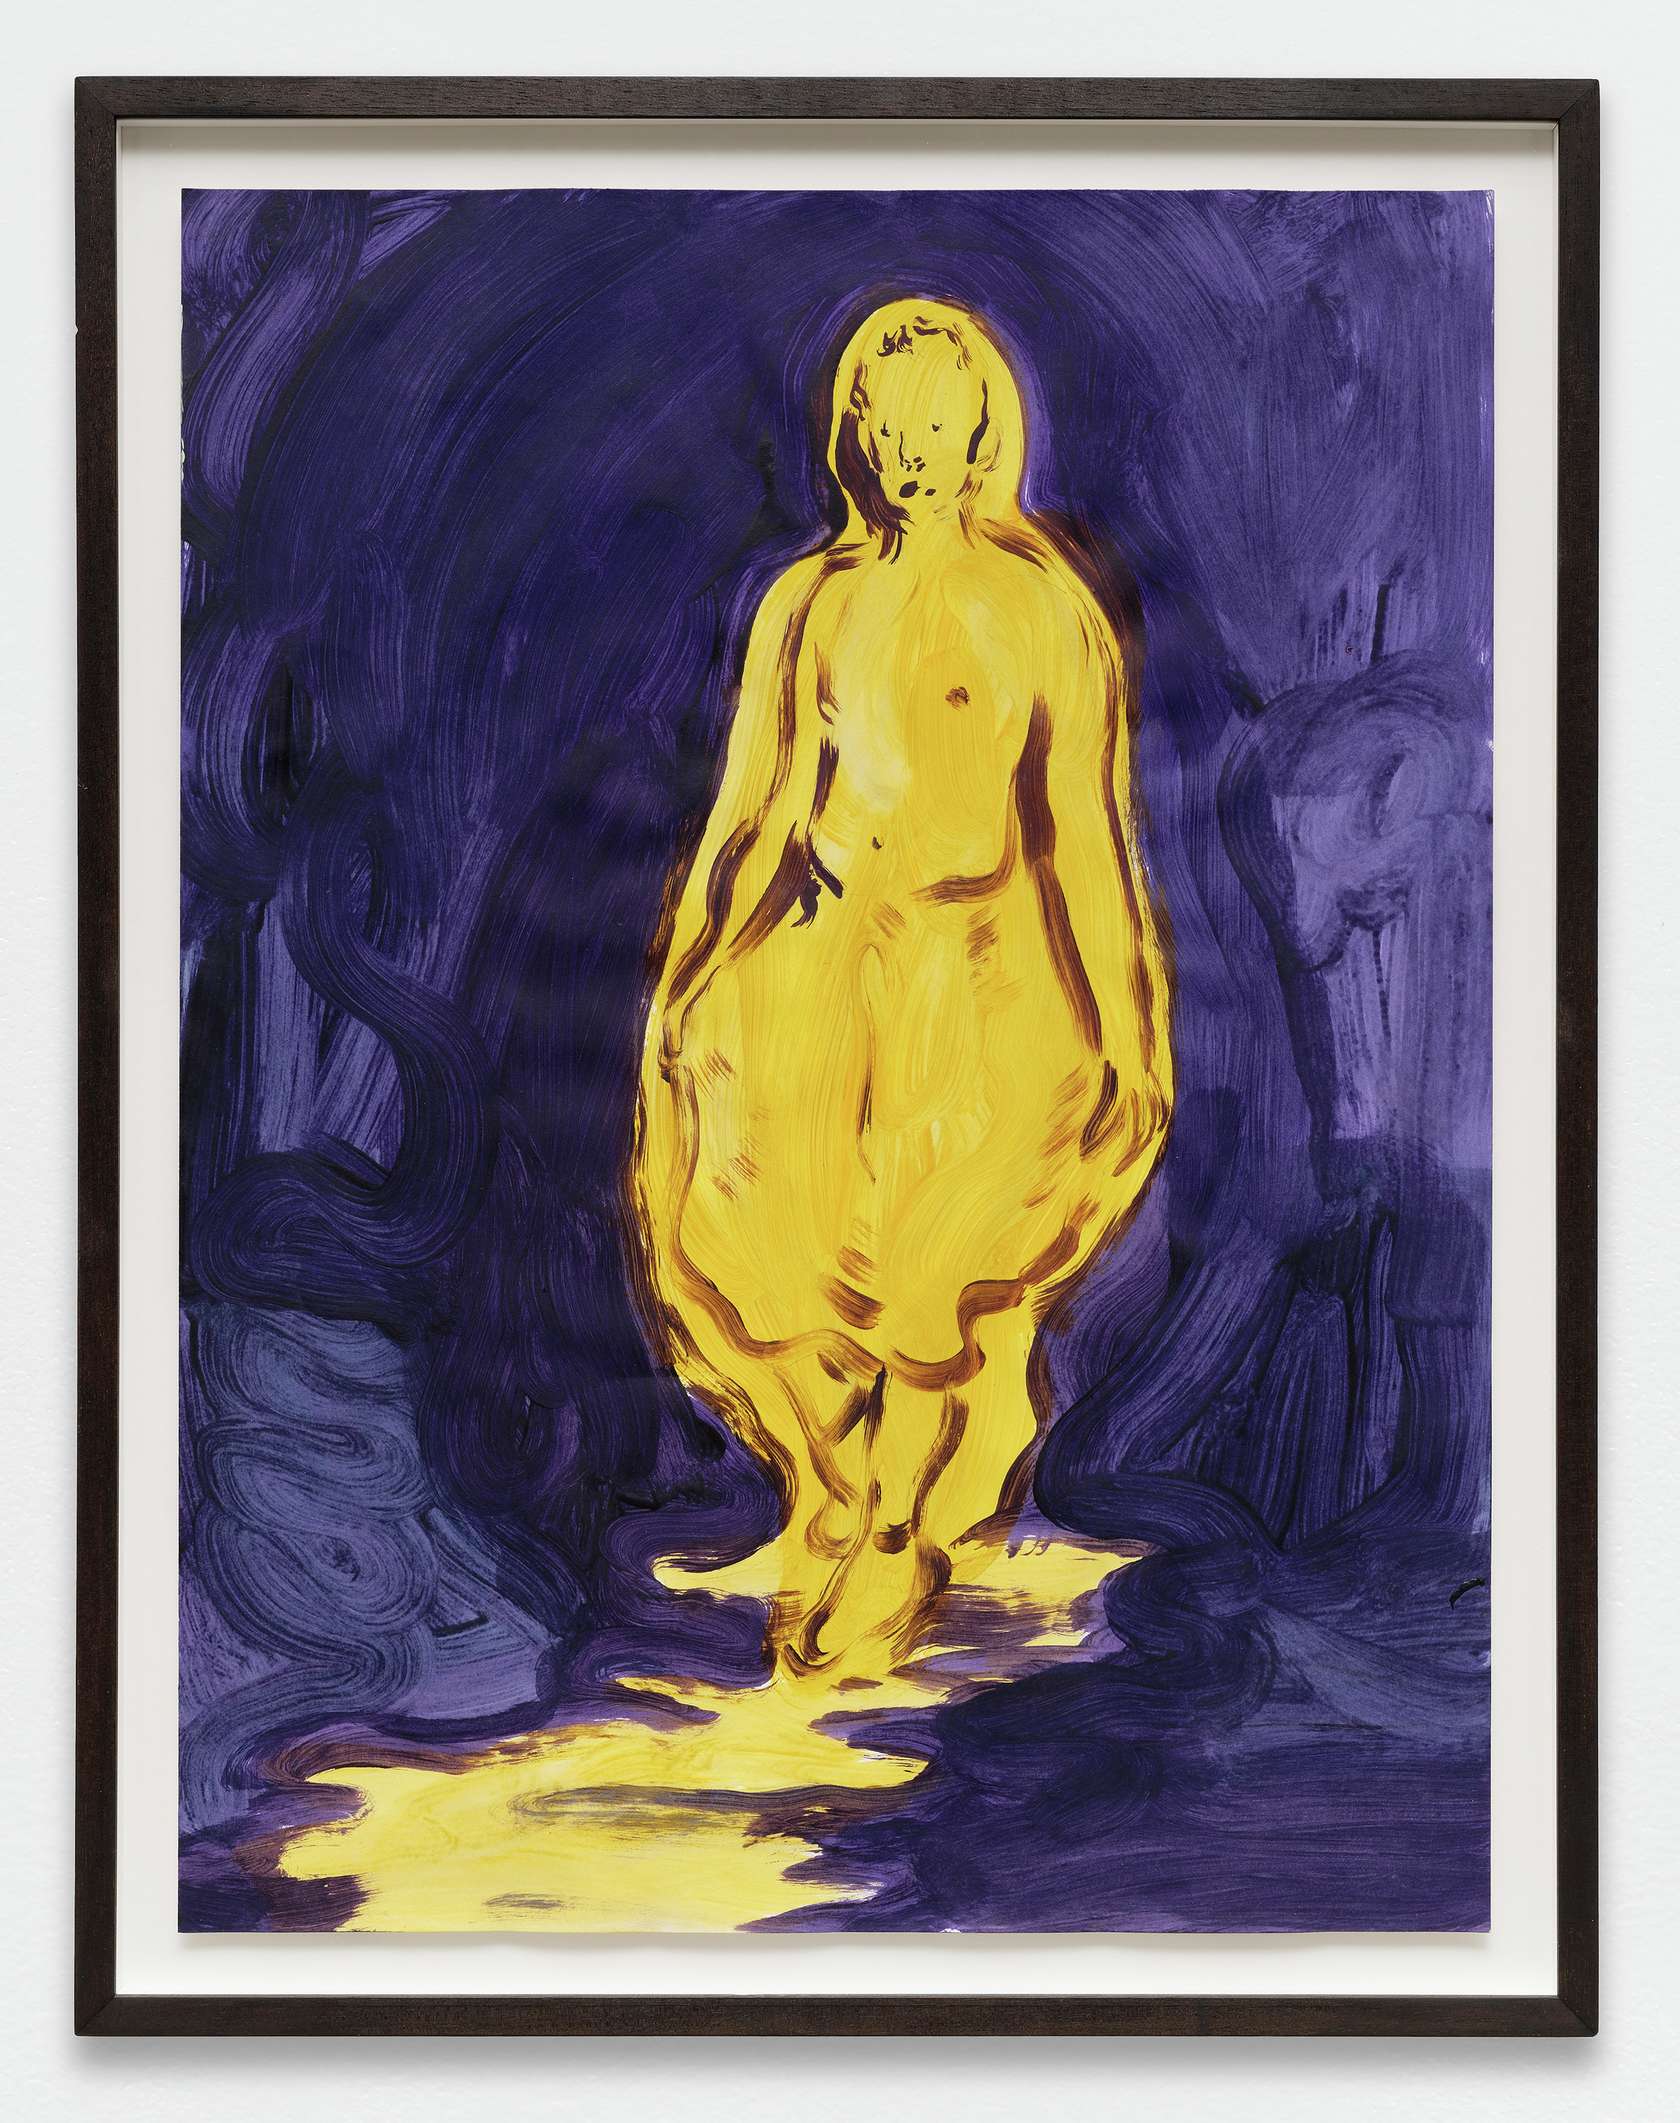 Anthony Cudahy, Flame reflection, 2019 Acrylique sur papier61 × 46 cm / 24  × 18 1/8 in. | 68 × 53 cm / 26 6/8 × 20 7/8 in. (encadré/framed)